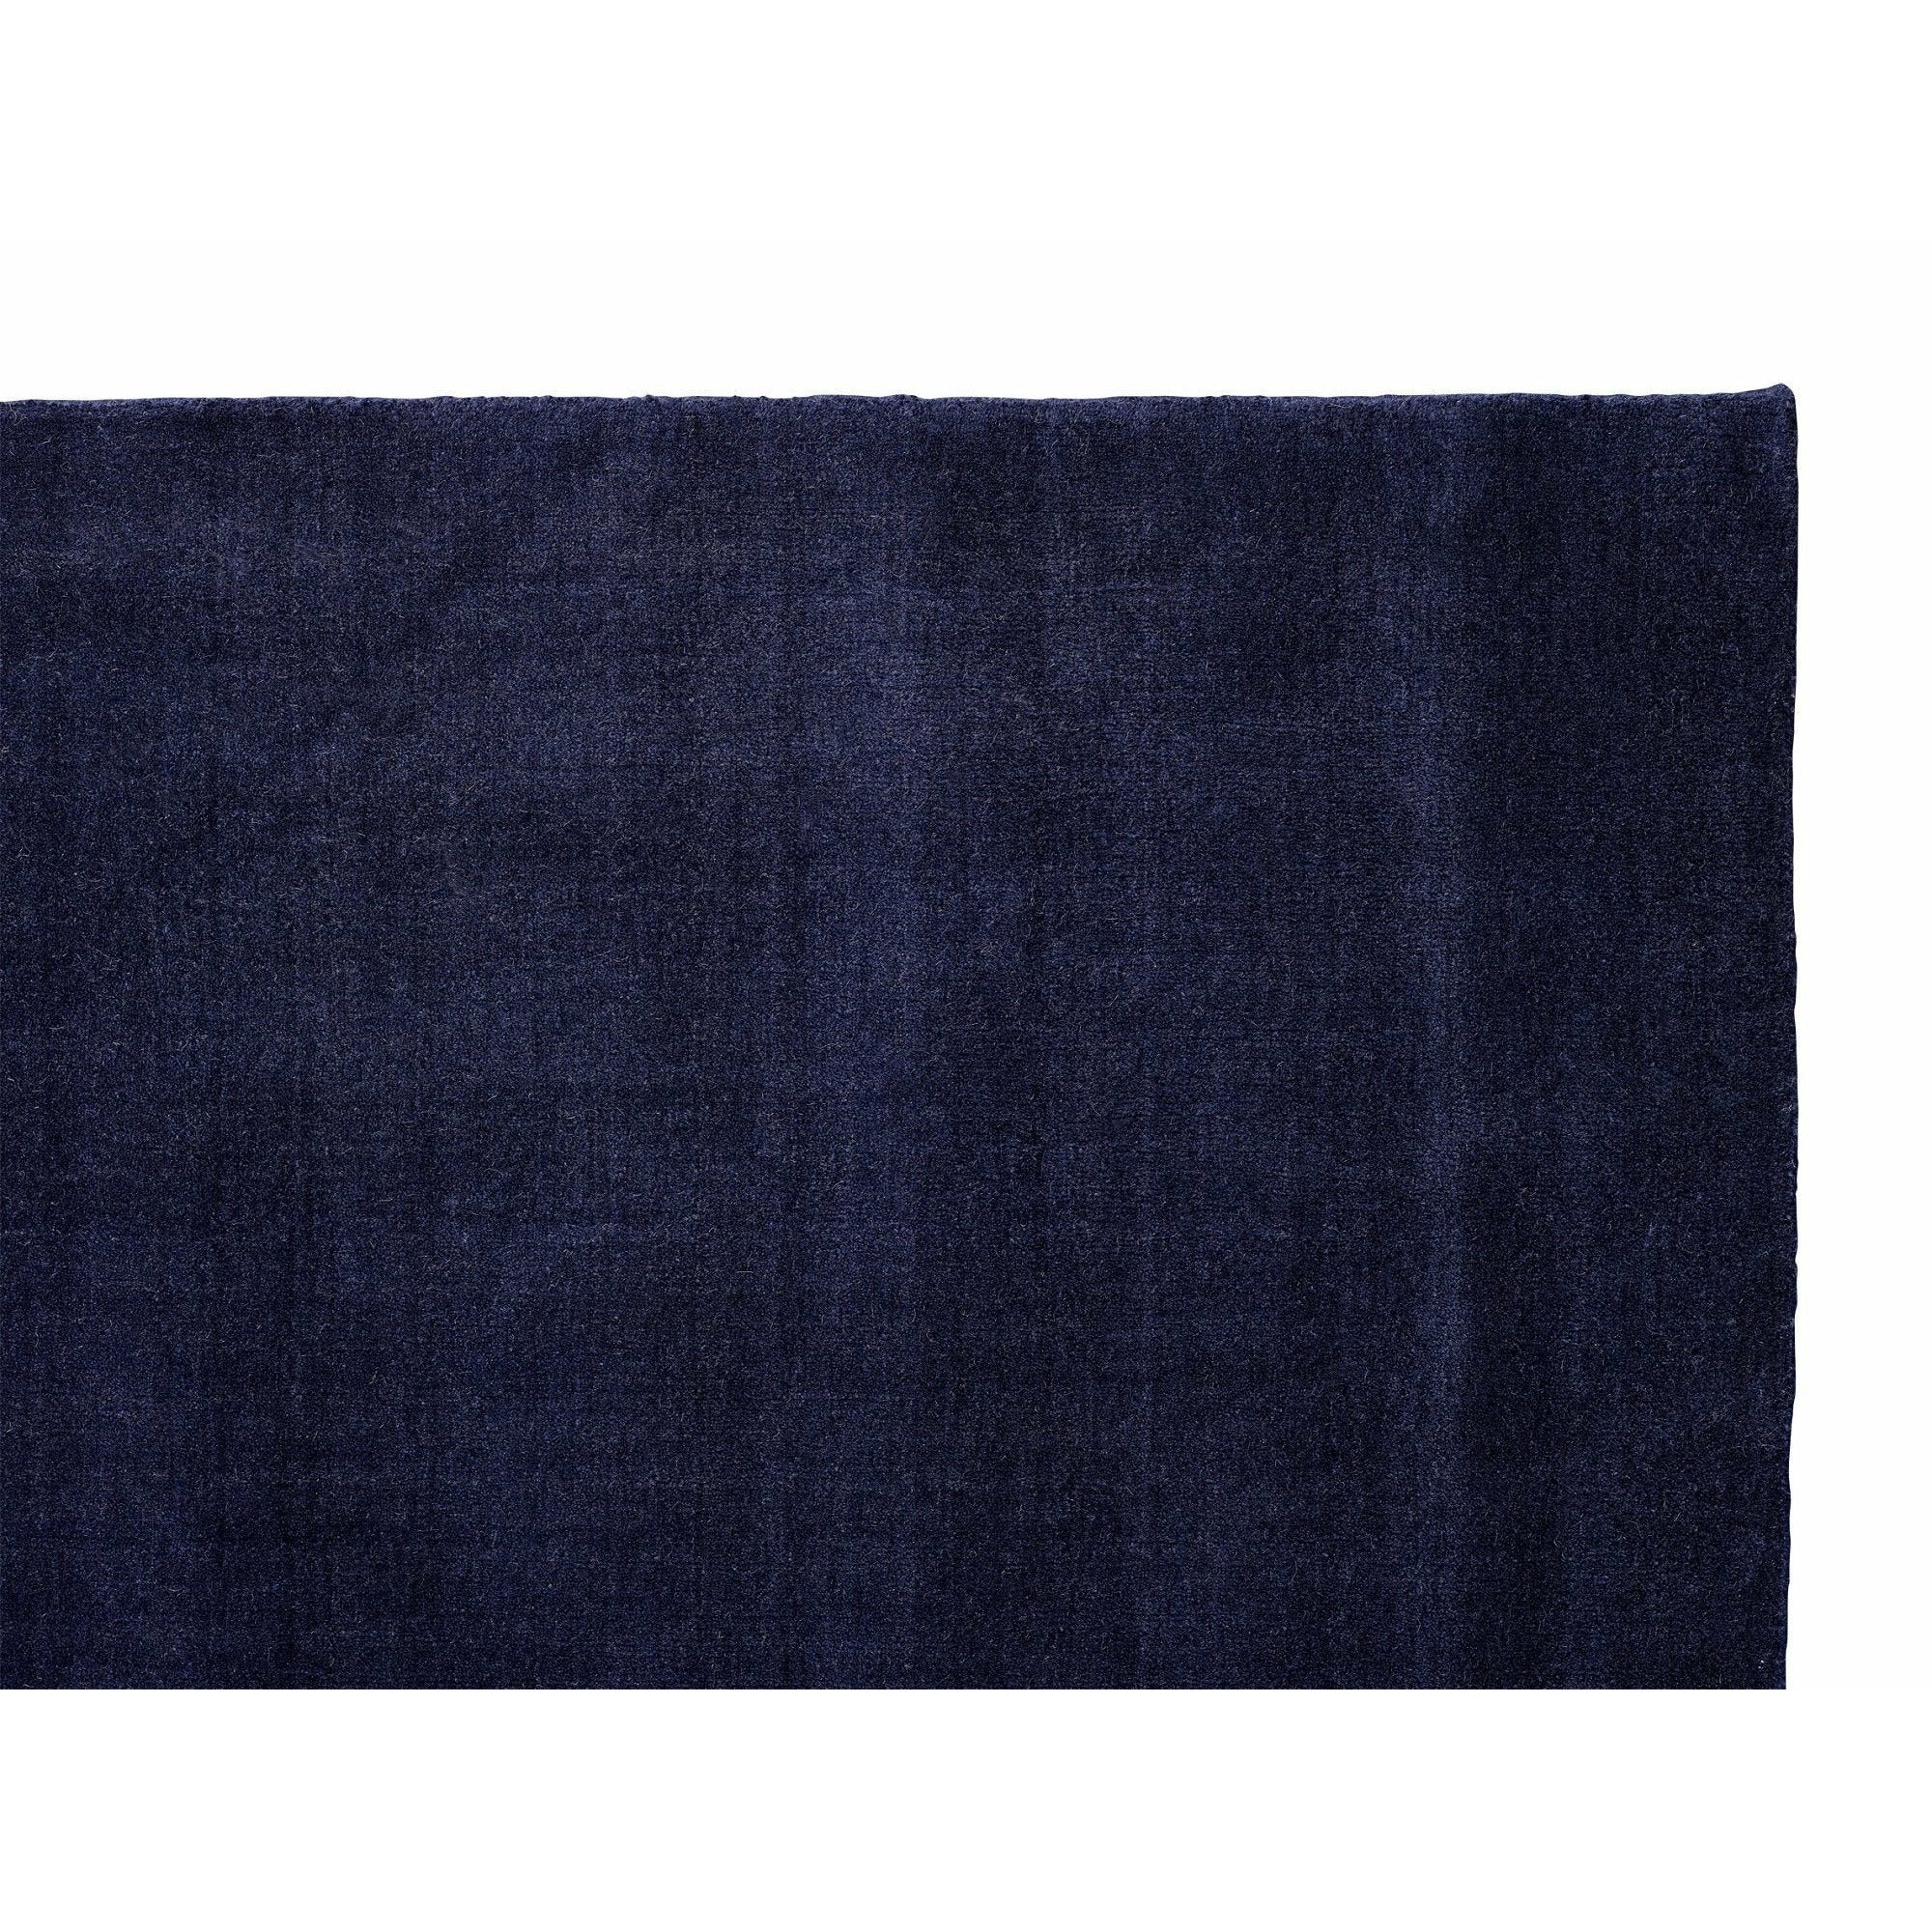 Massimo Earth Bamboo alfombra vibrante azul, 200x300 cm